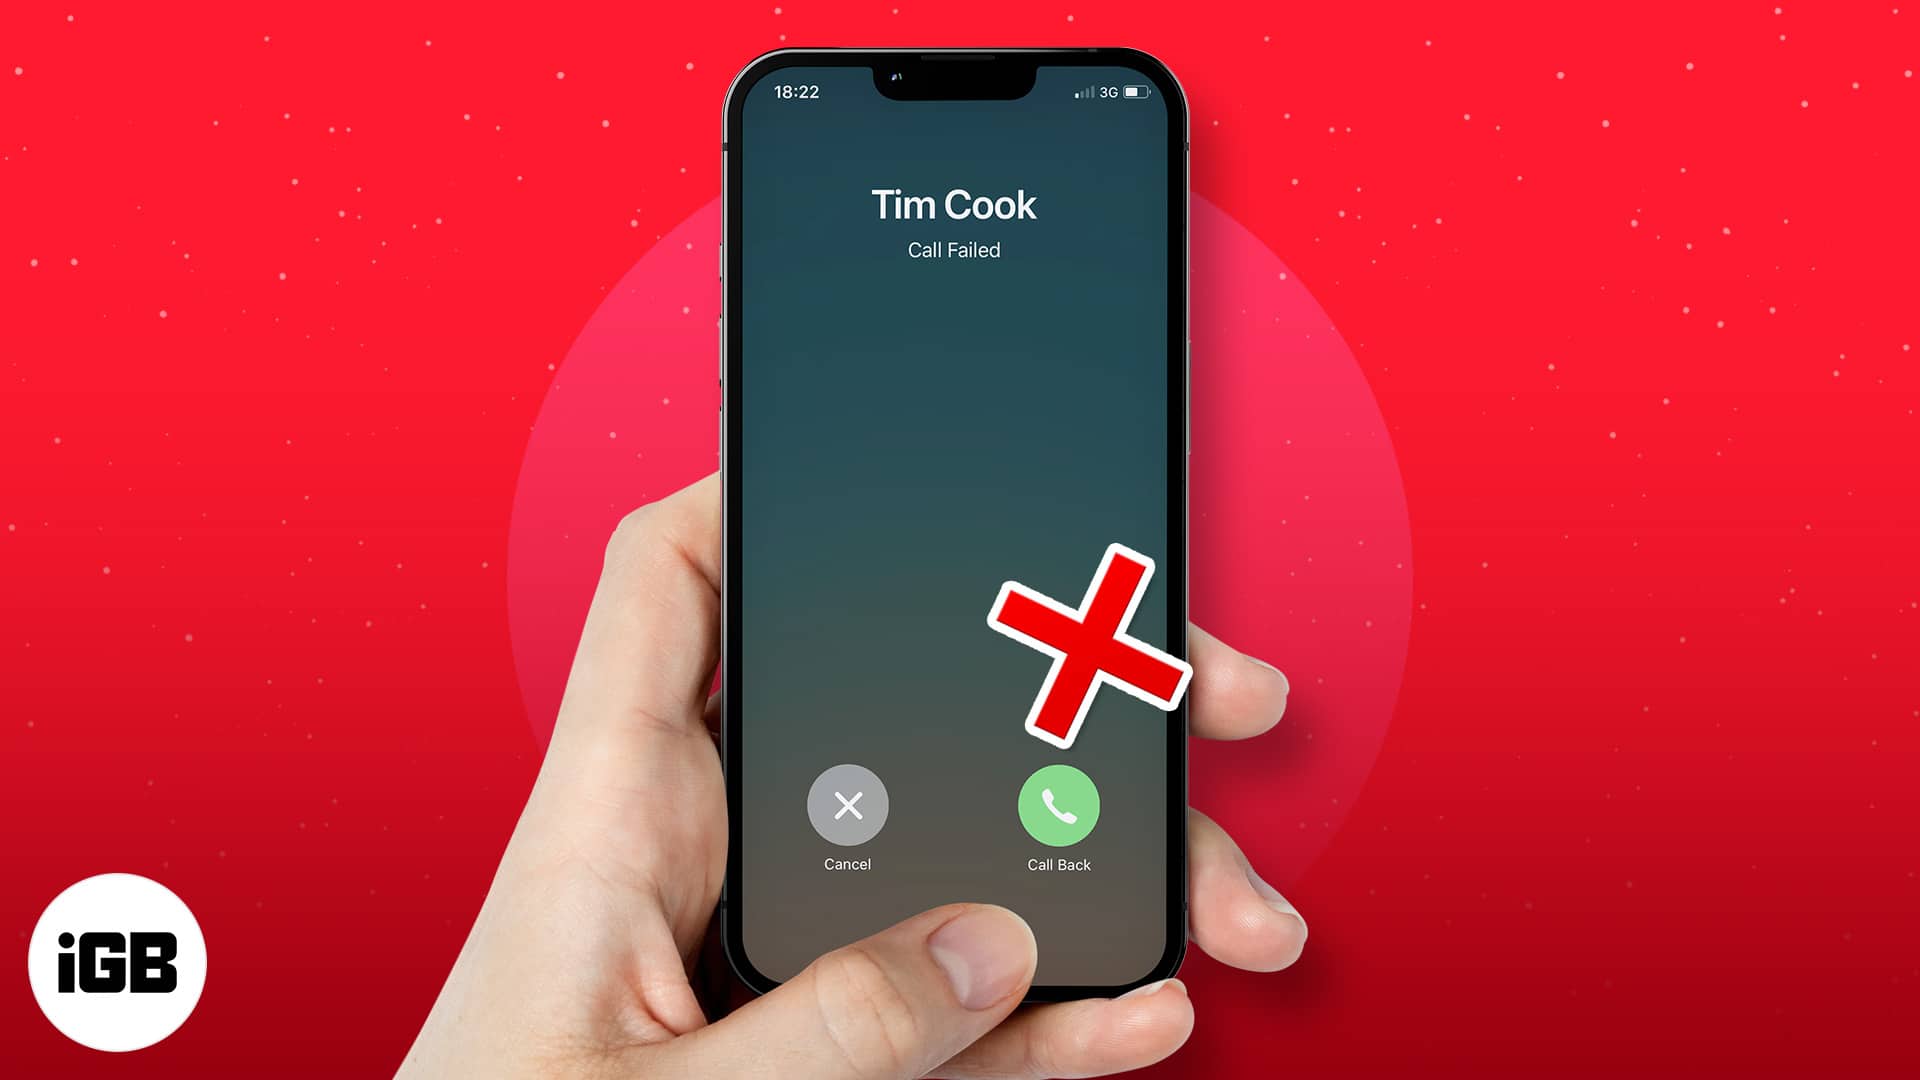 Iphone Call Failed: What Do I Do?